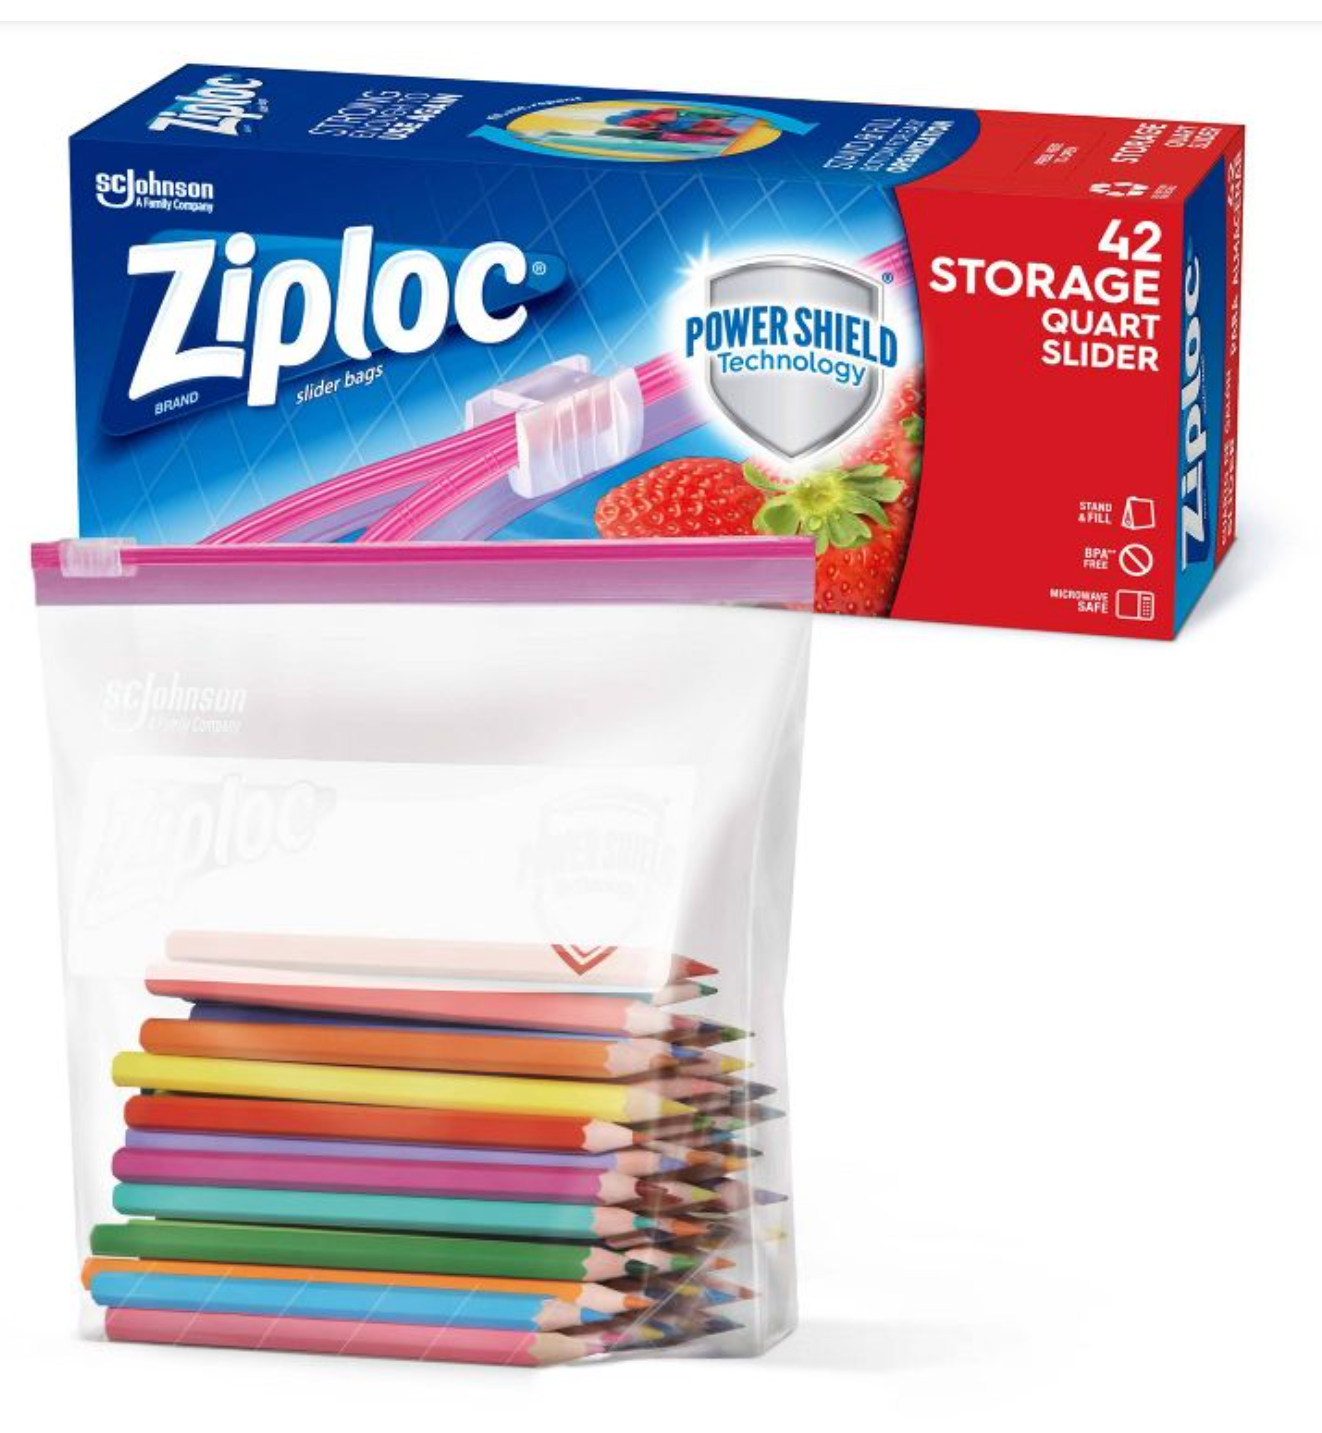 Ziploc Slider Storage Quart Bags 42ct